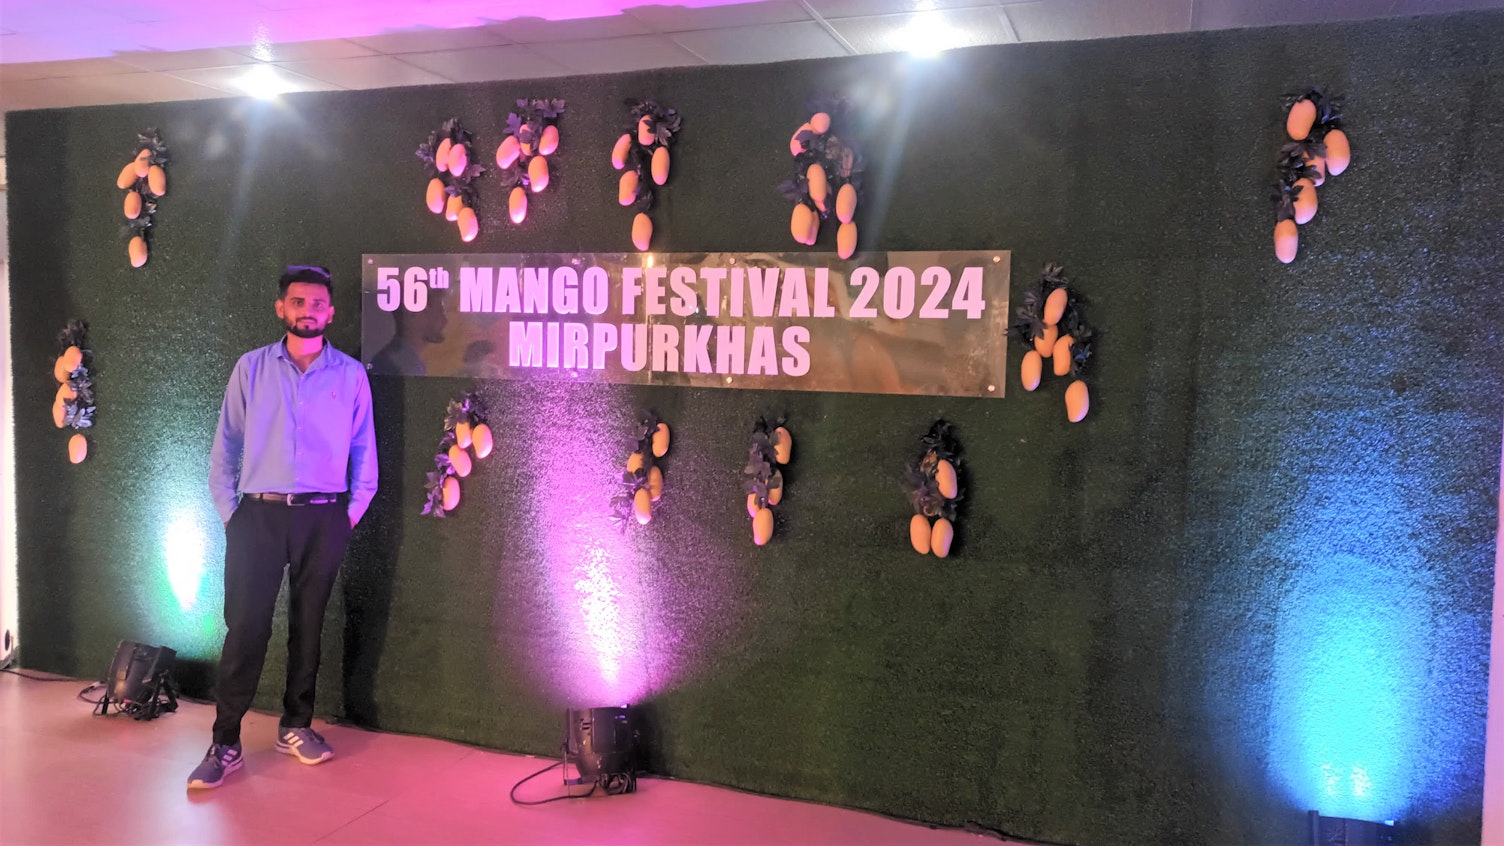 SGS Took Part in the 56th Mango Festival in MirpurKhas